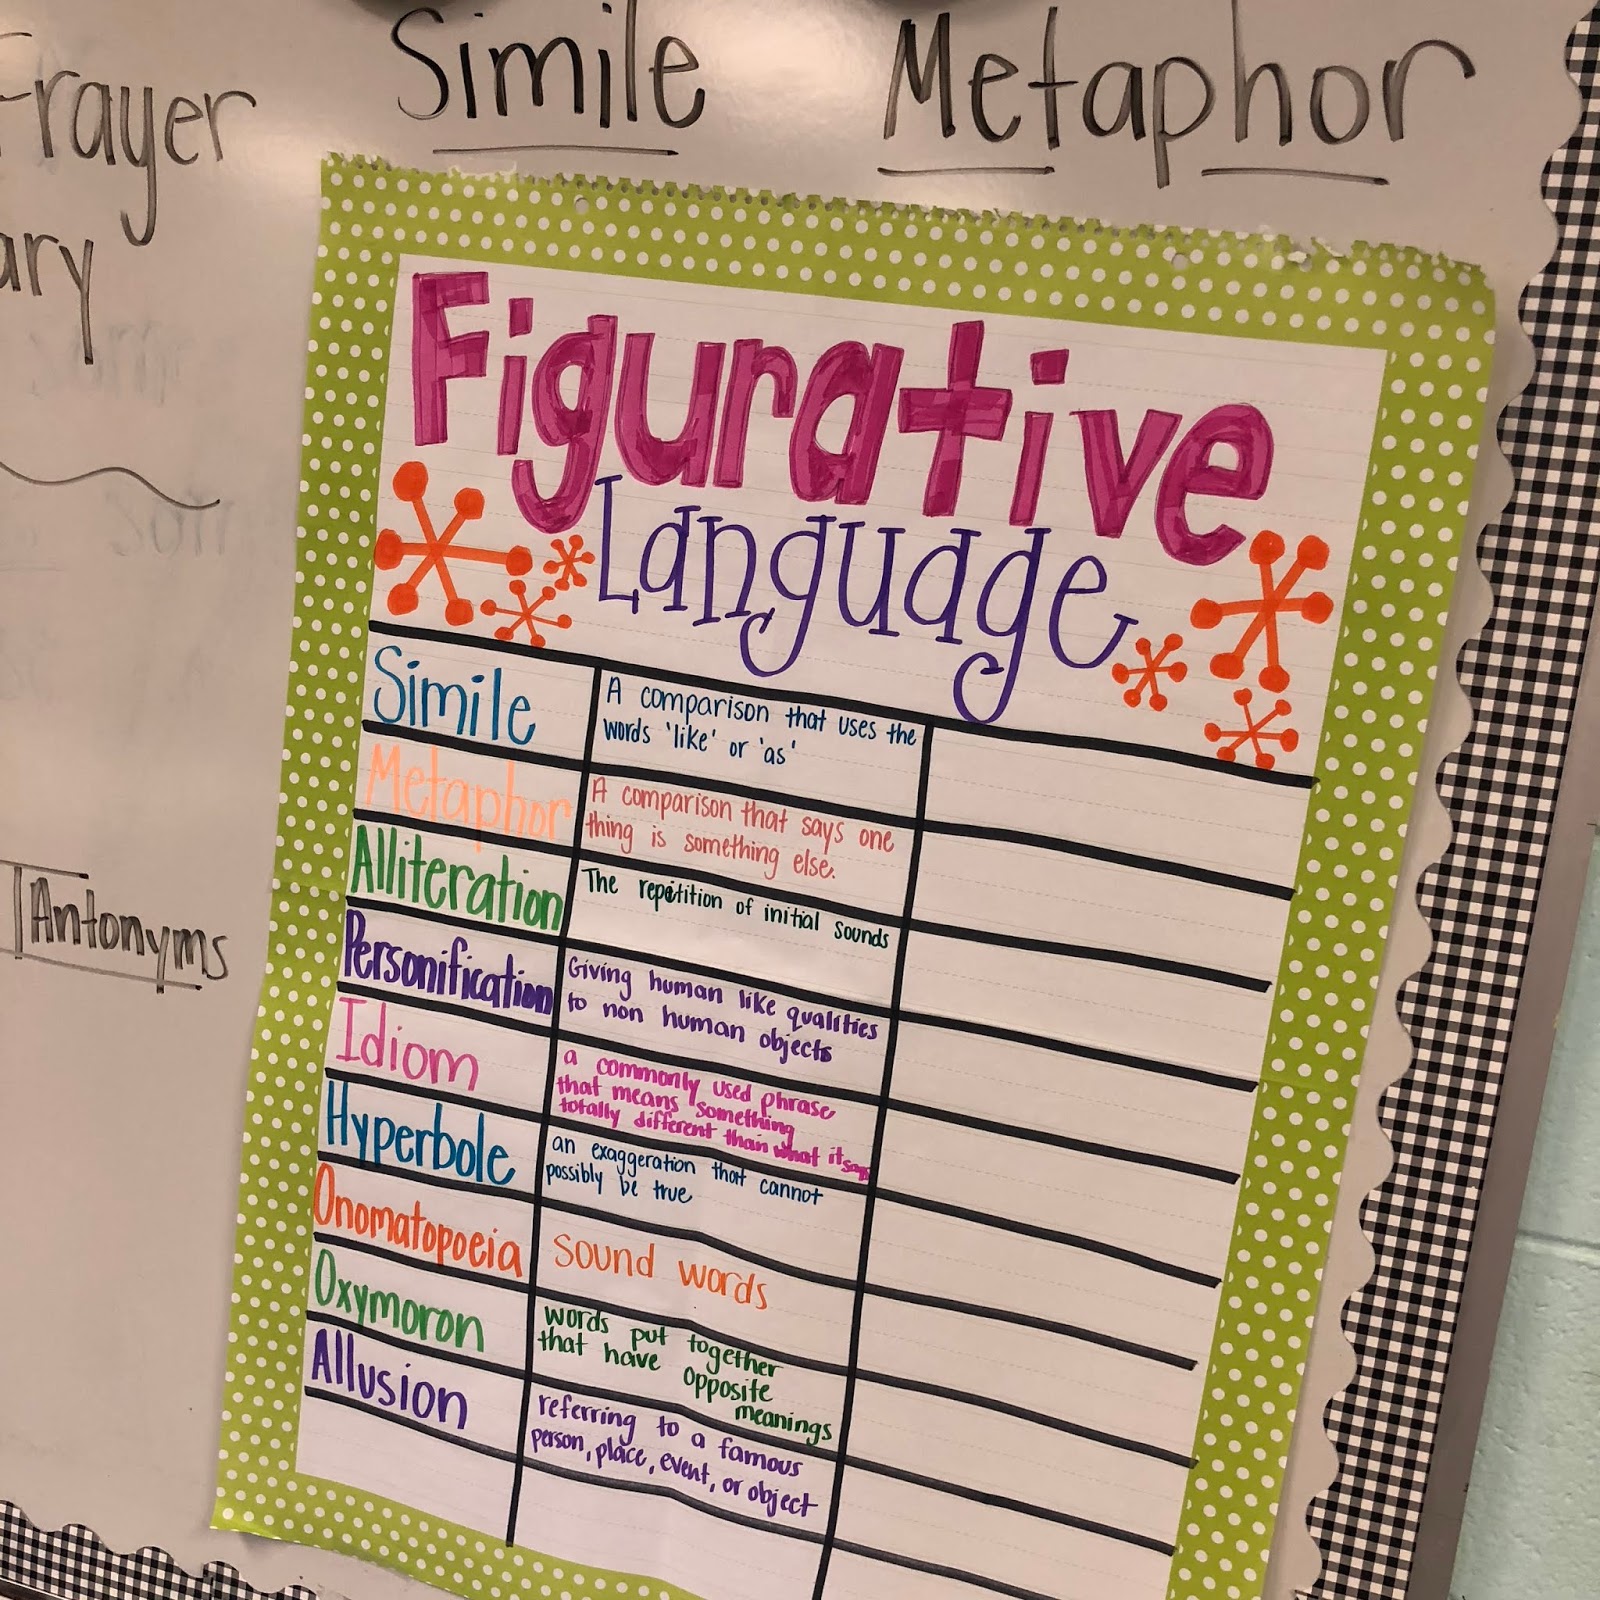 Figurative Language Chart